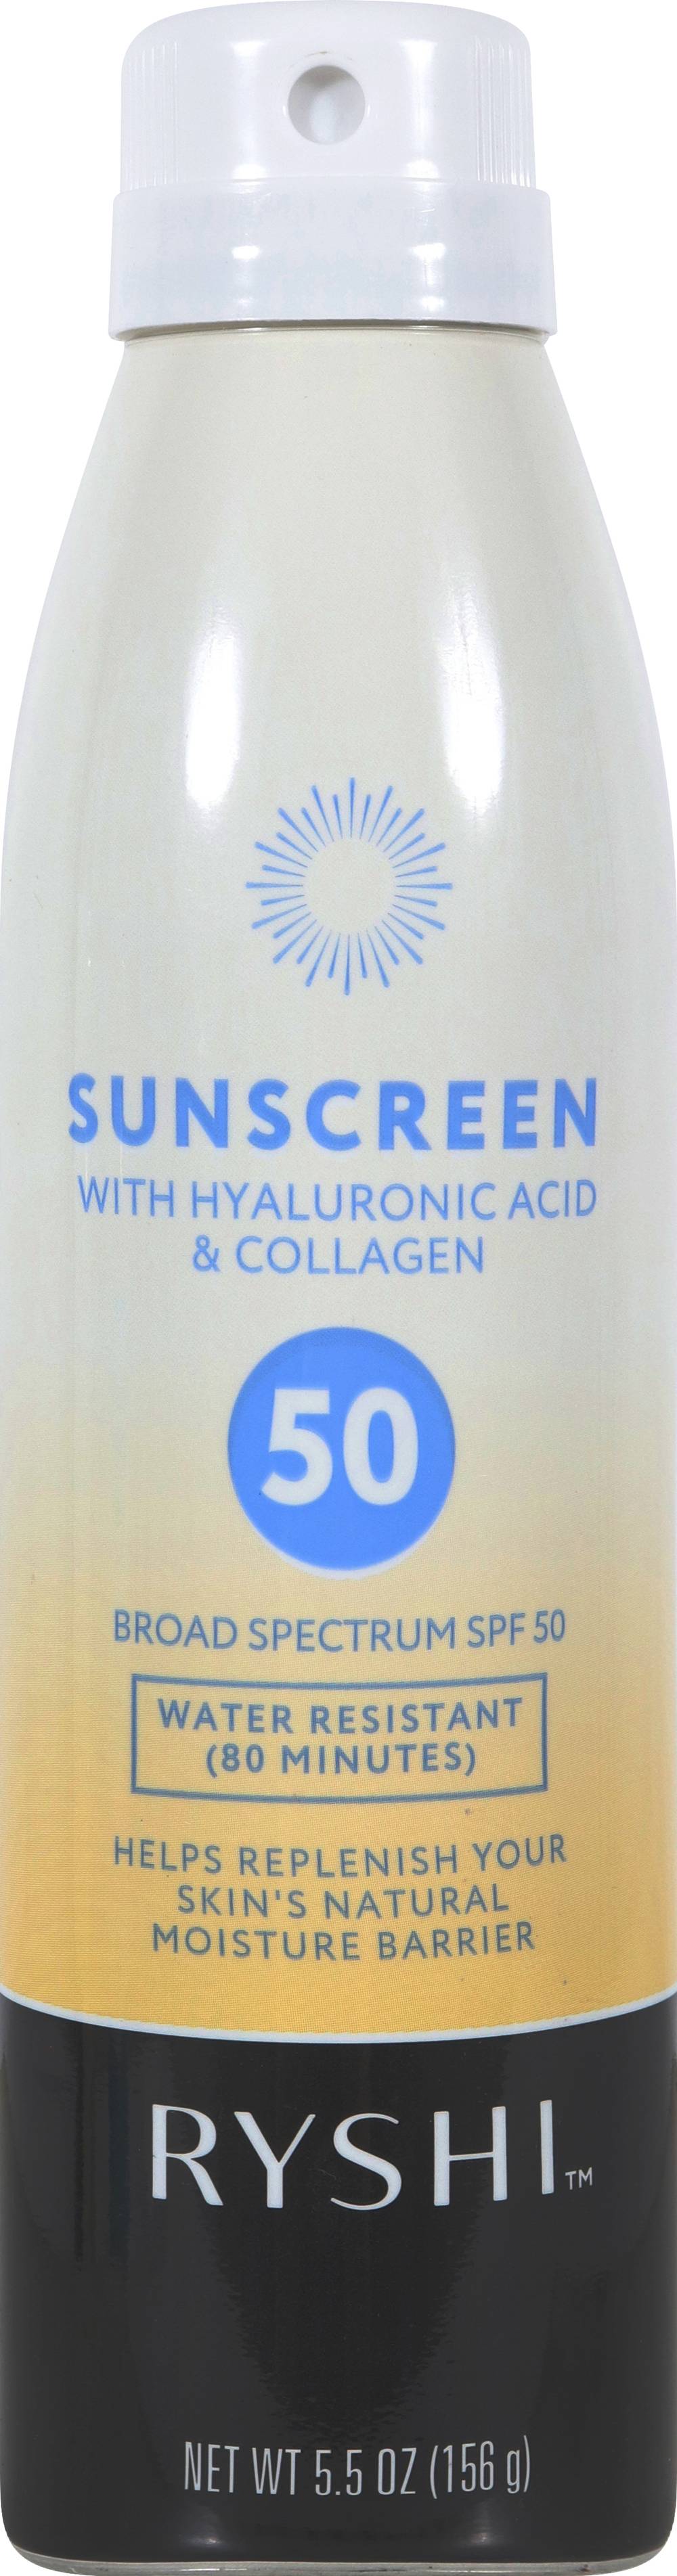 Ryshi Sunscreen Spray W Hyaluronic Acid and Collagen Spf50